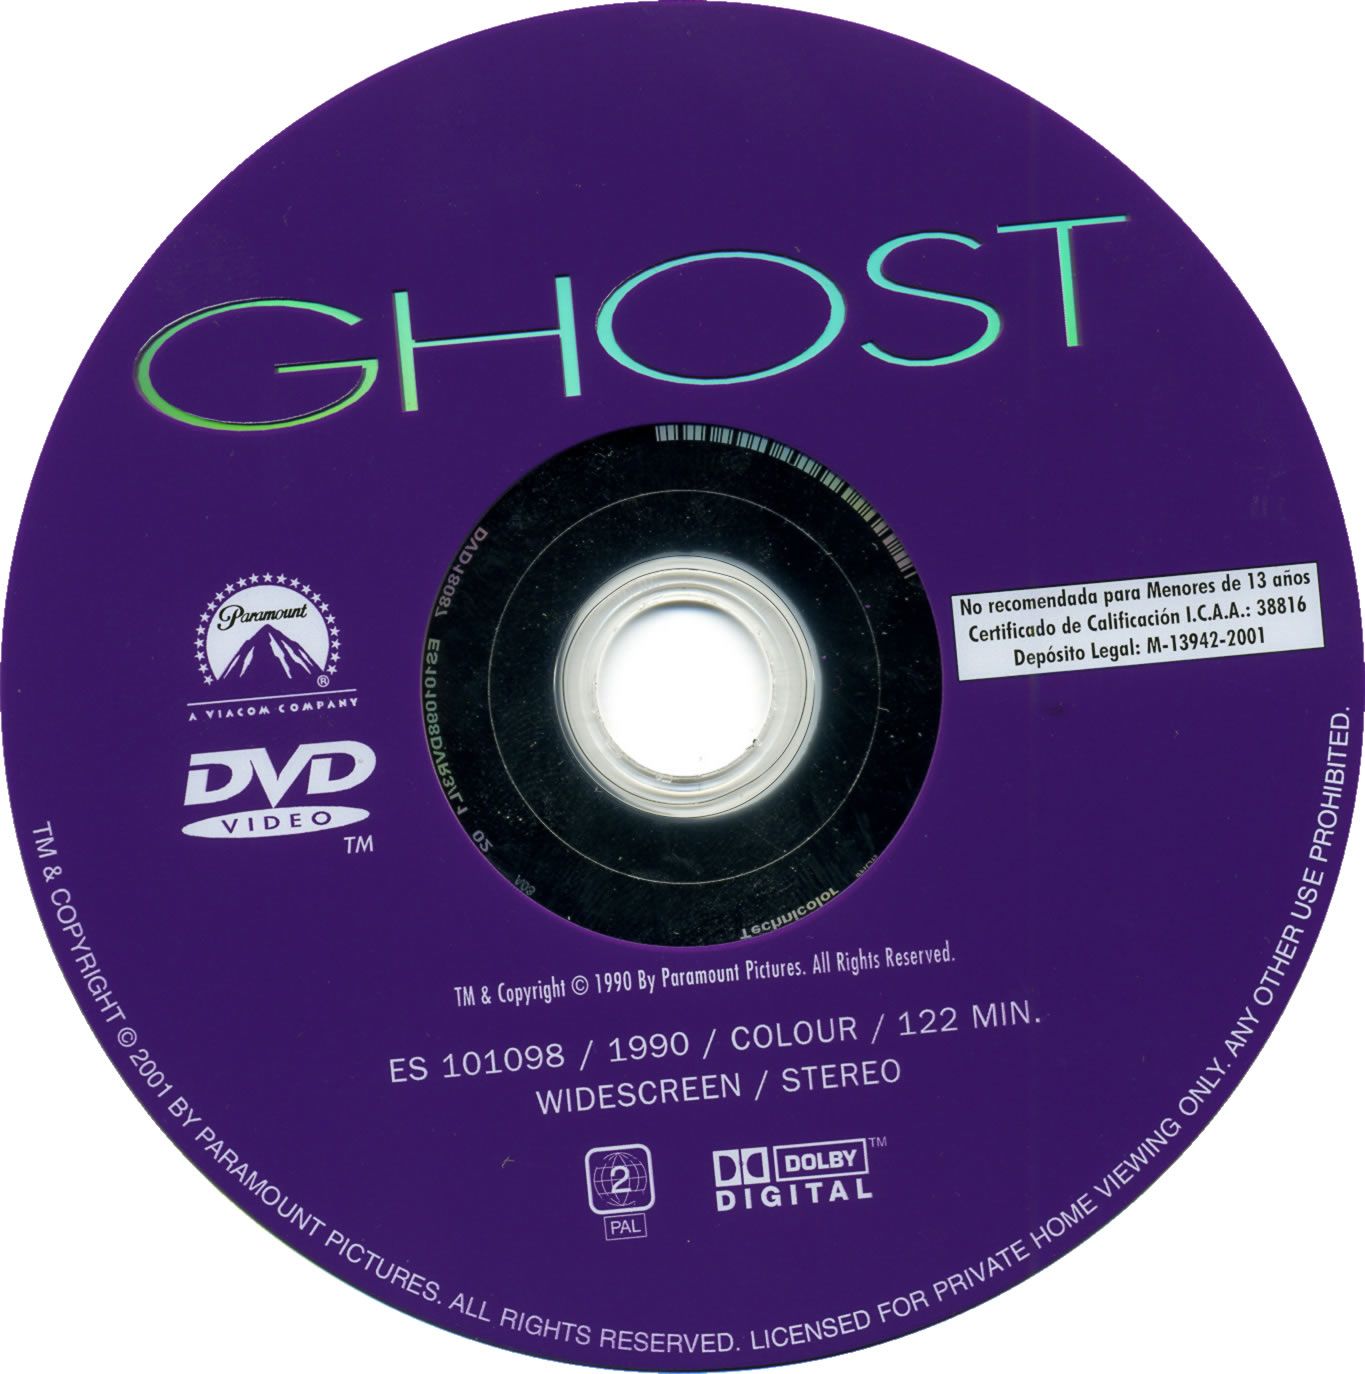 https://blogger.googleusercontent.com/img/b/R29vZ2xl/AVvXsEhlVZSP8Q2wtPqr4GbIKYjNf4Yvj9VEBuLdtsvisEYW2CtfEm6iaE9UnwpCUiQfamAtTggSWDu9jXulyCiw3p8wWV7qJT2Bt2gO3ybARiSqgGz6a8tKmyjOuBgnyP-bkEfyIIJFqjjVKy63/s1600/Ghost+CD.jpg